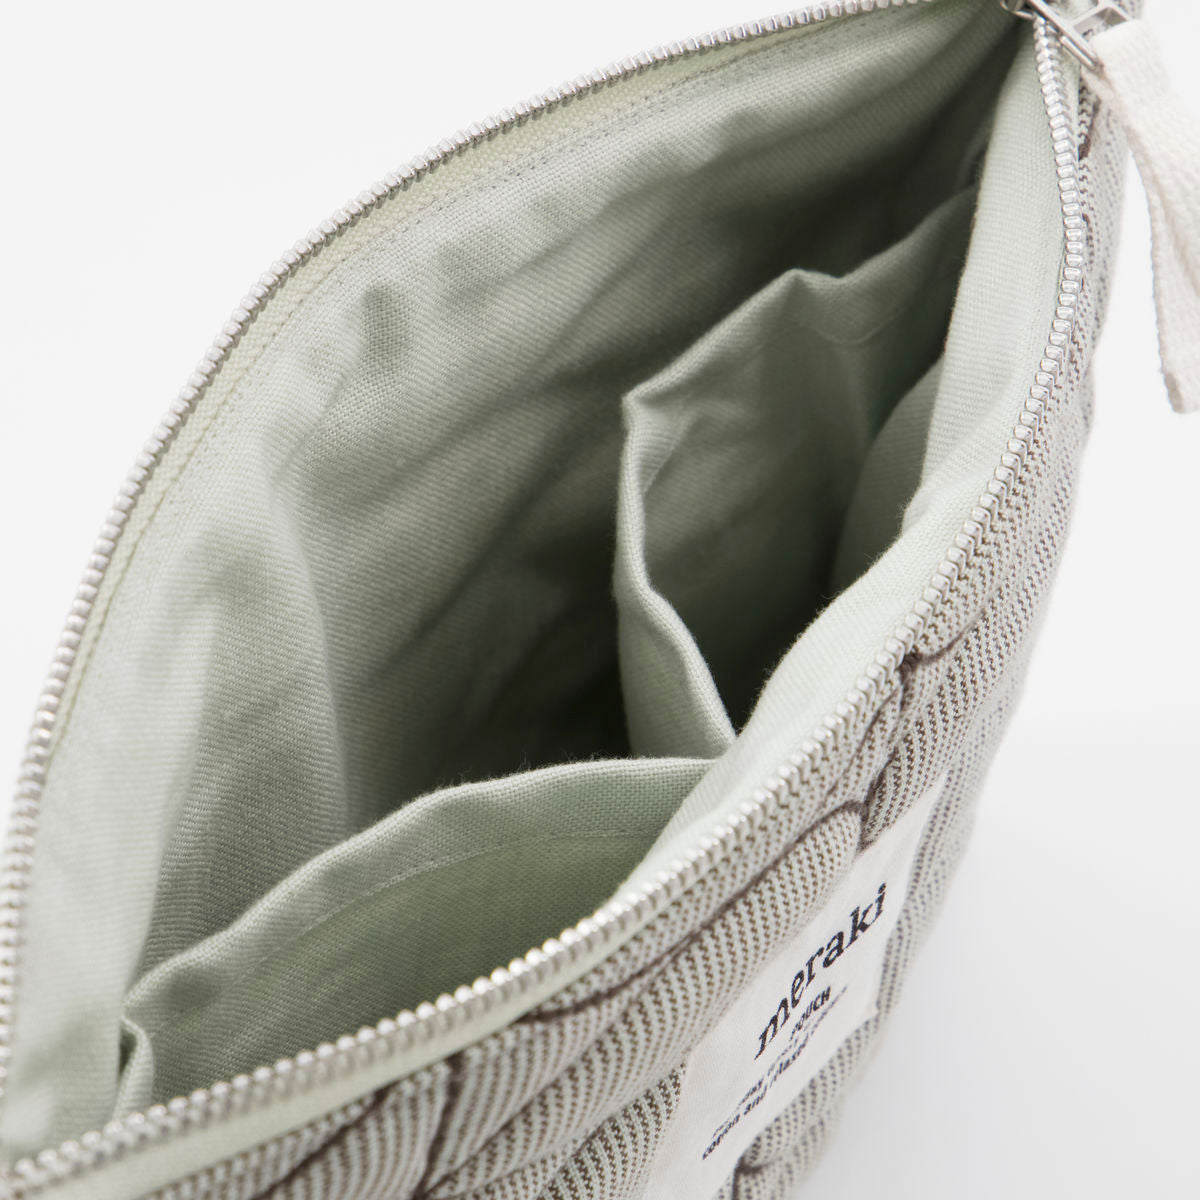 Meraki makeup purse, mentha, light gray/army green